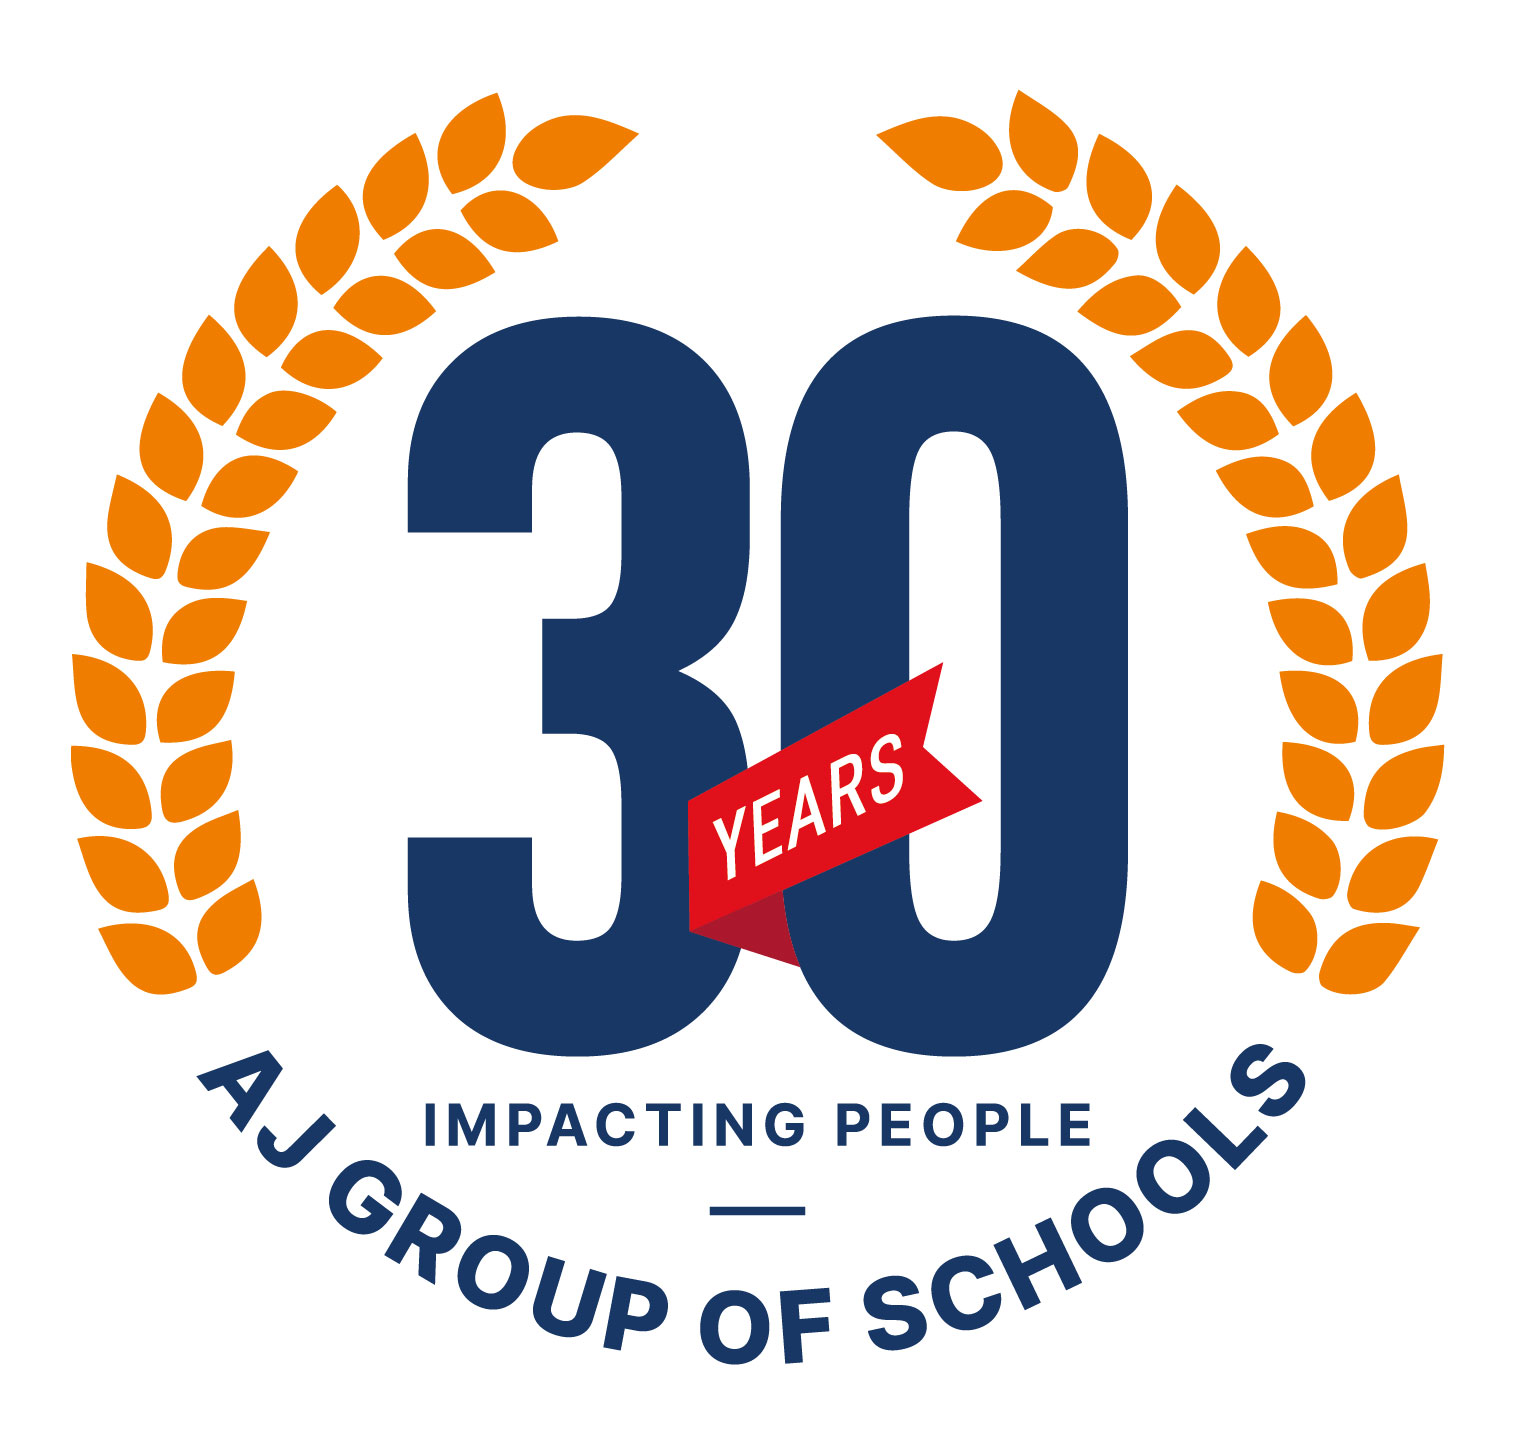 AJ Group of Schools 30 years anniversary logo